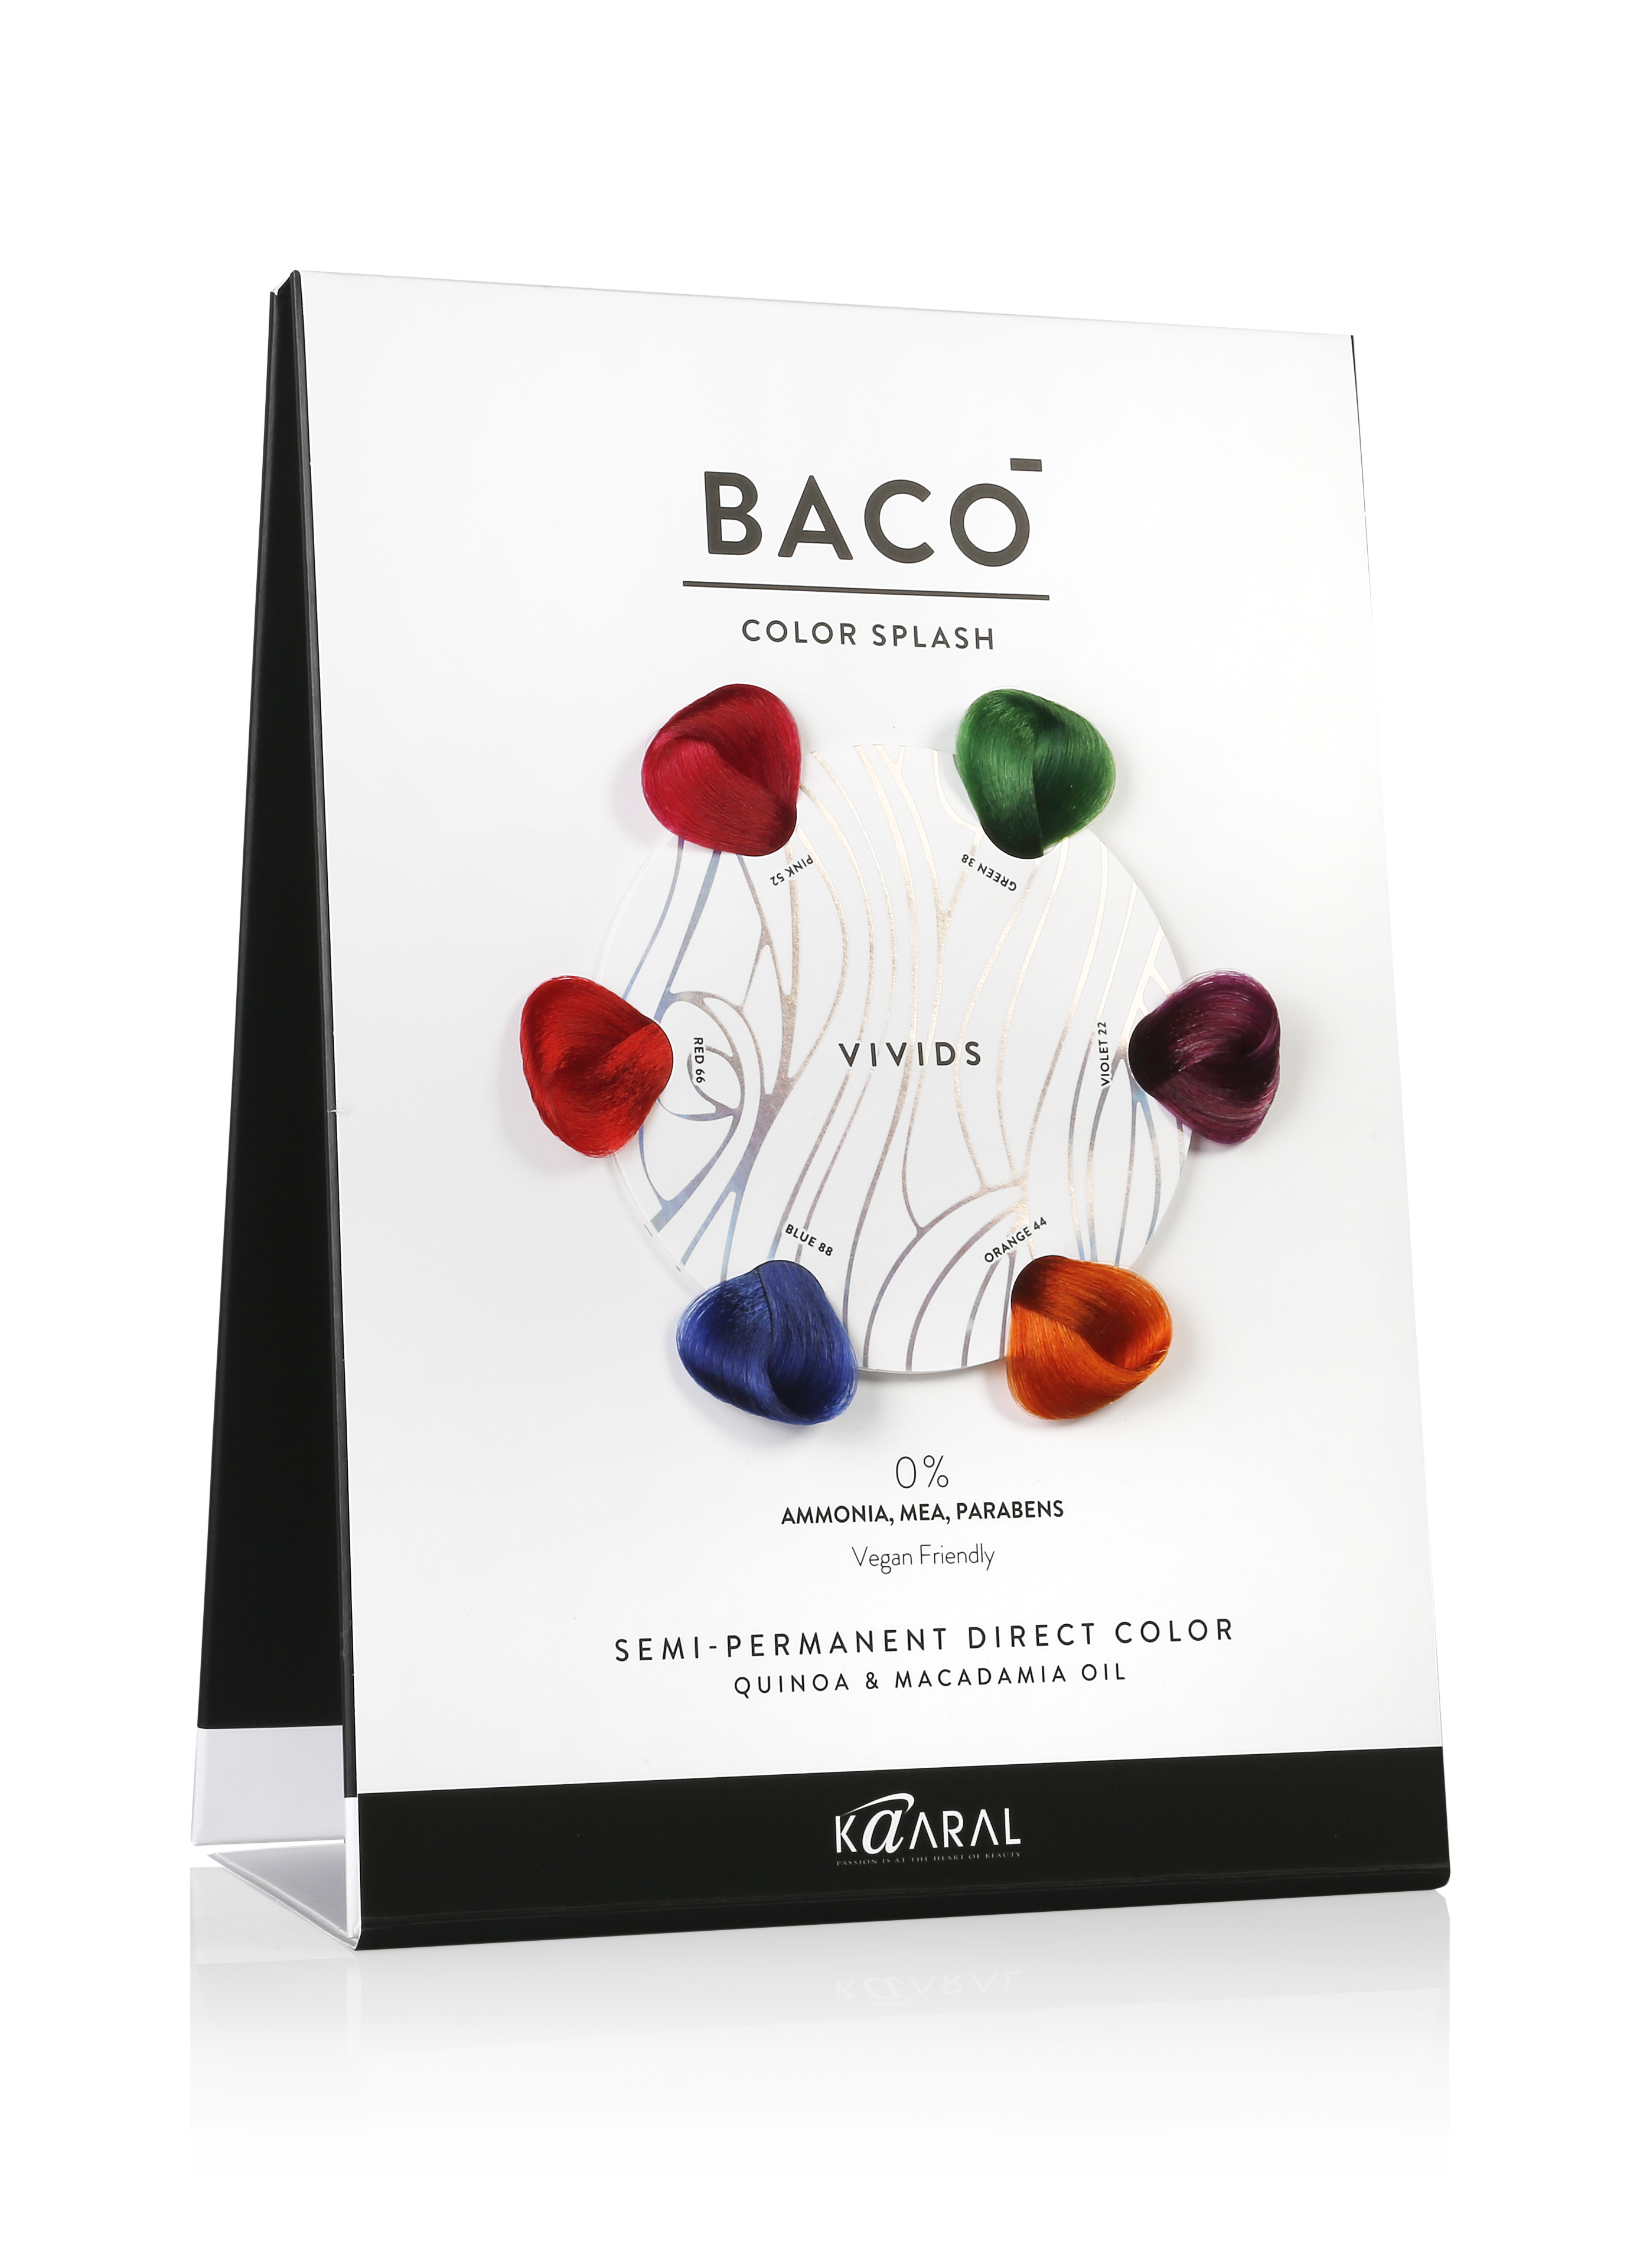 Kaaral - Baco Colorsplash Chart - Creata Beauty - Professional Beauty Products